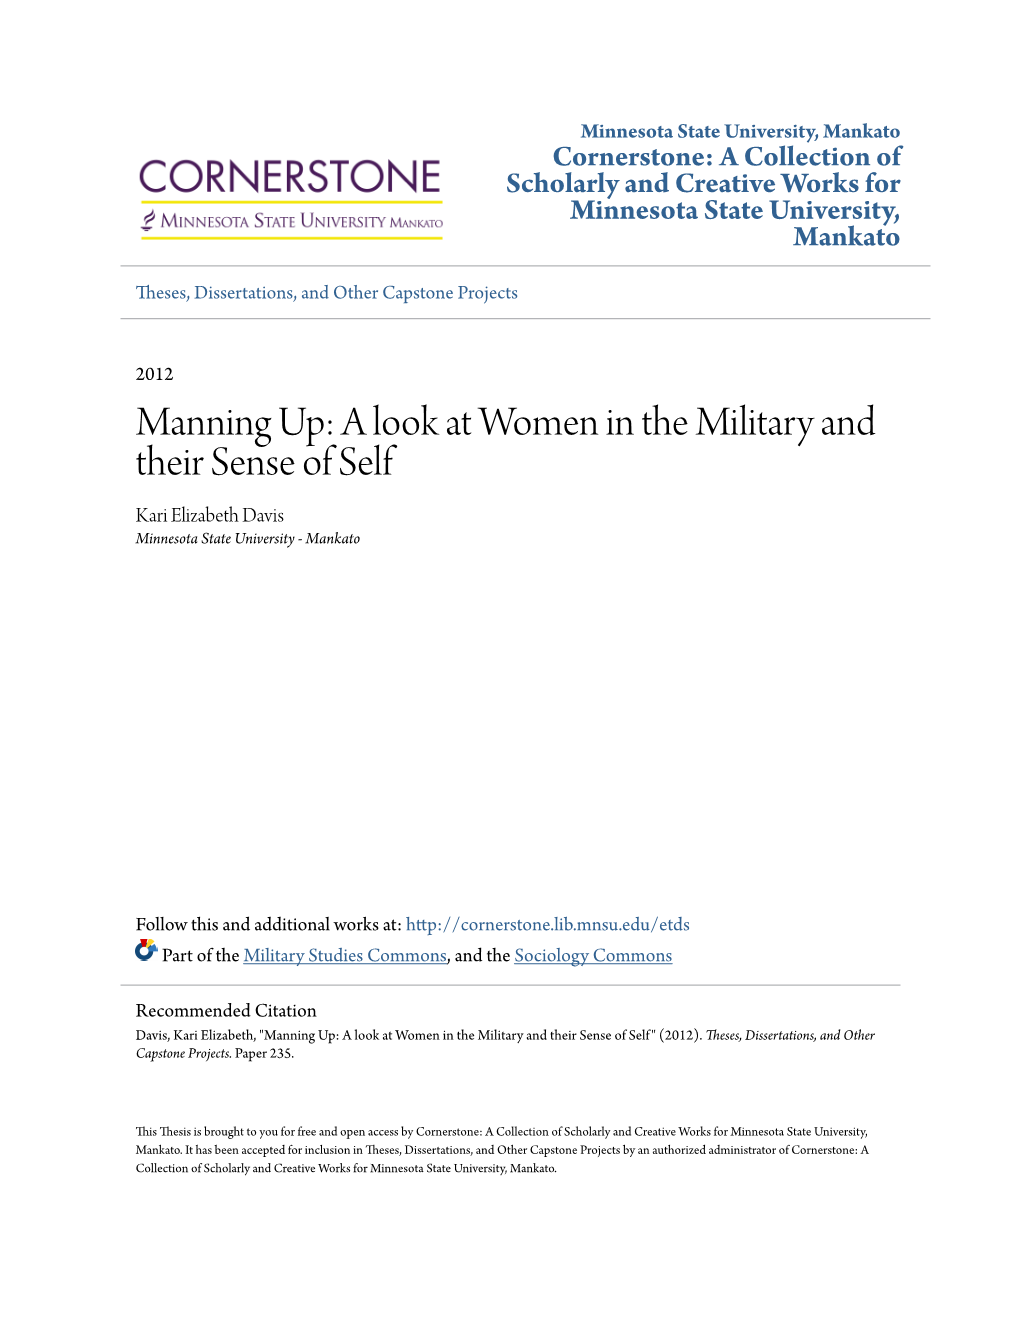 Manning Up: a Look at Women in the Military and Their Sense of Self Kari Elizabeth Davis Minnesota State University - Mankato